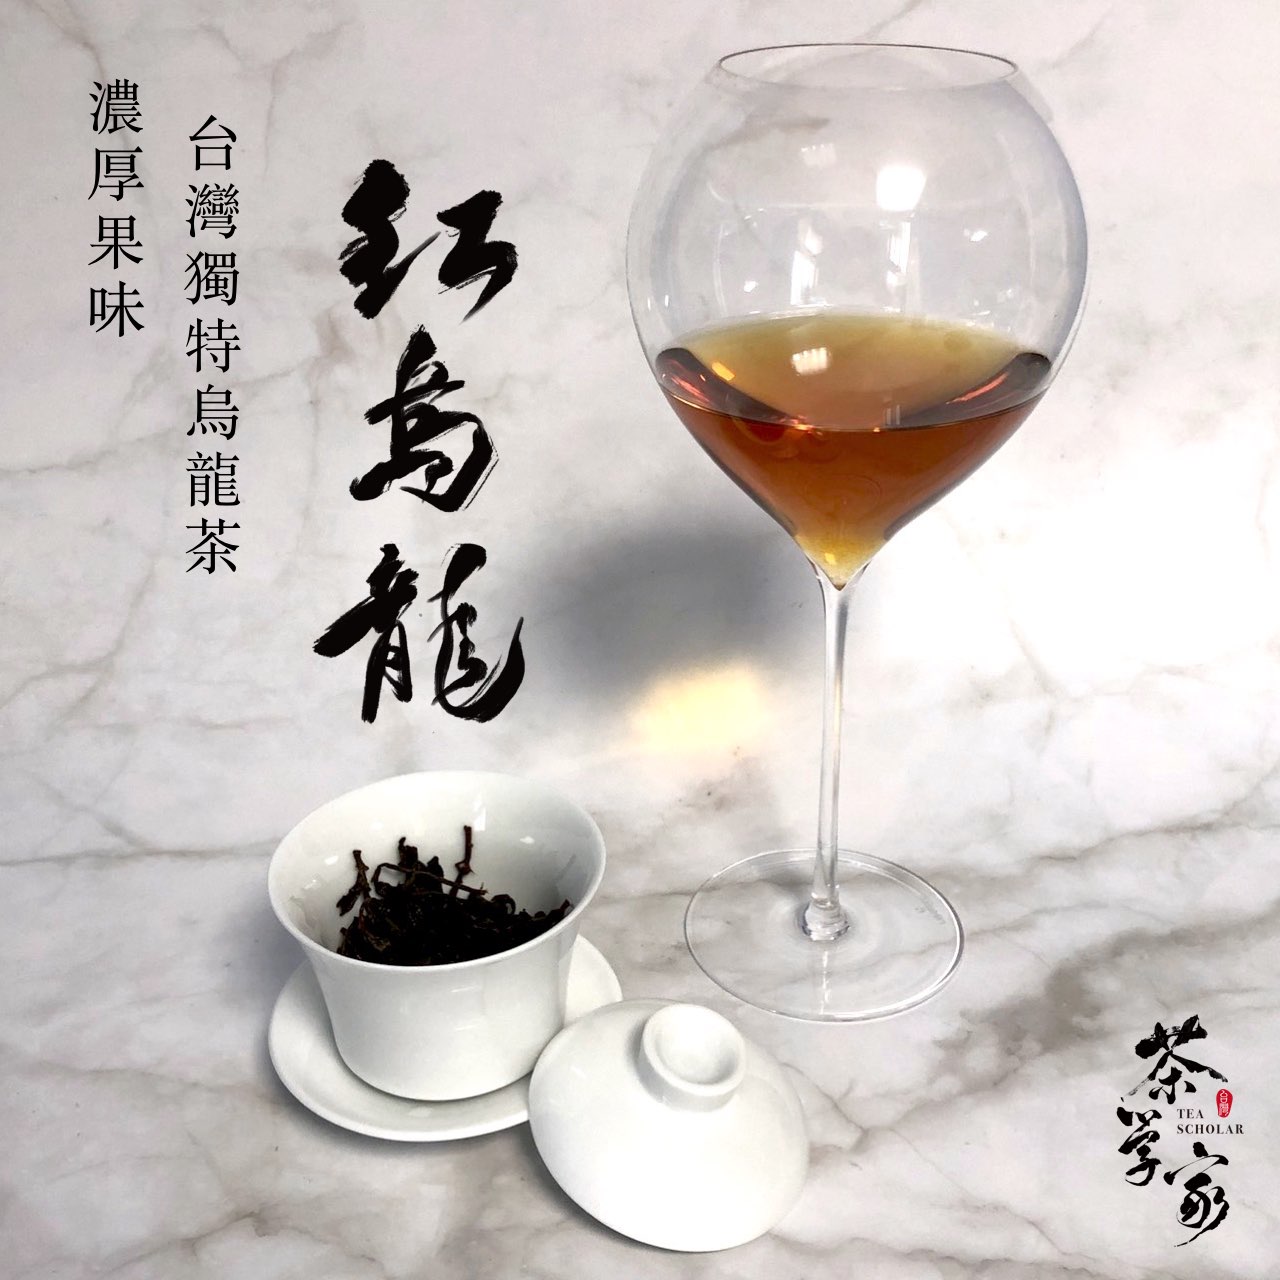 紅烏龍, Black Oolong Tea, 台灣茶葉, Taiwan Loose Leaf Tea